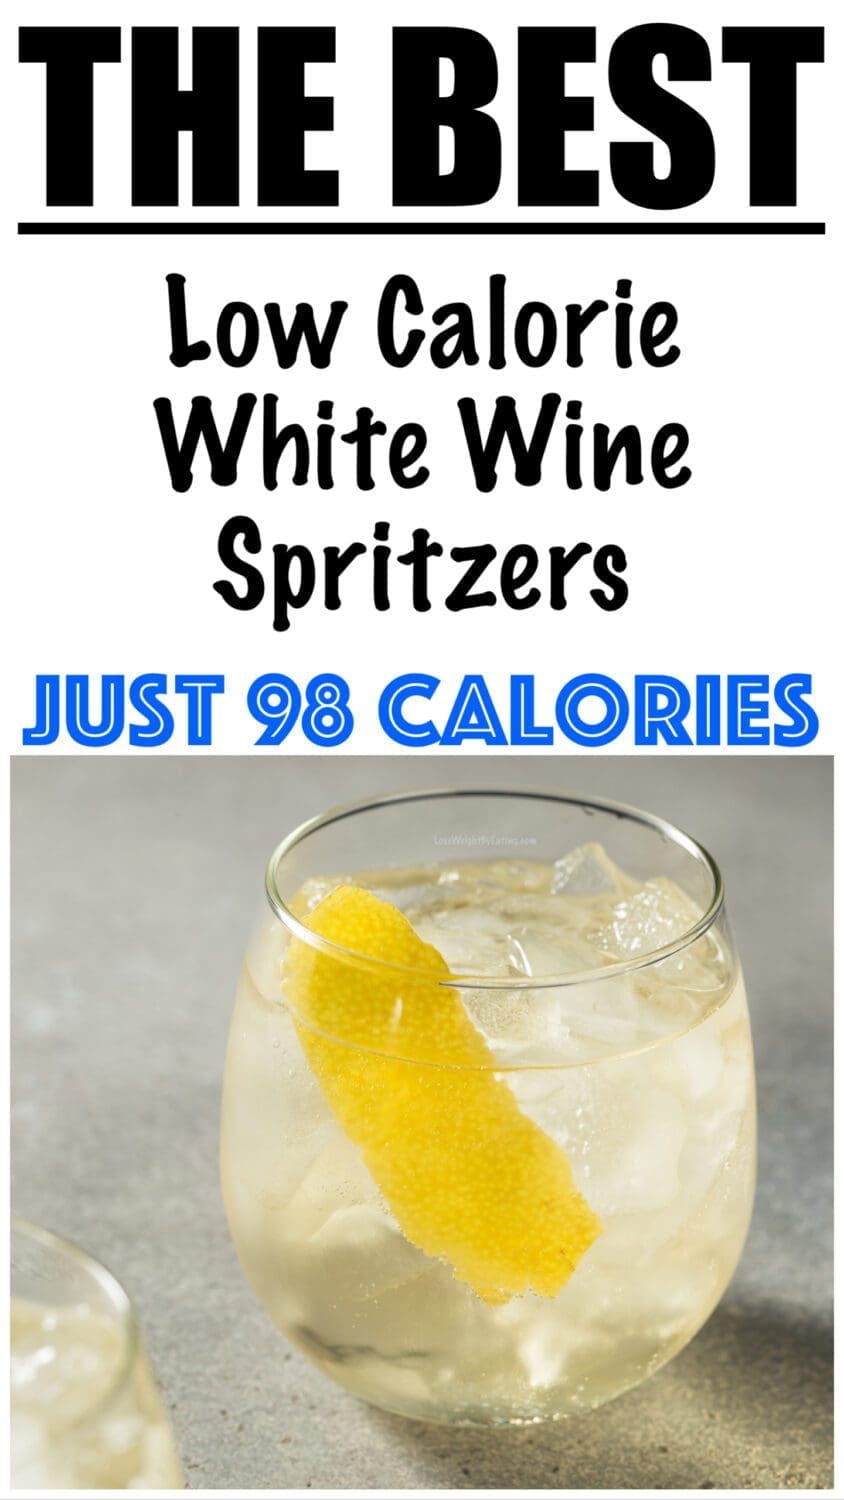 Low Calorie White Wine Spritzers